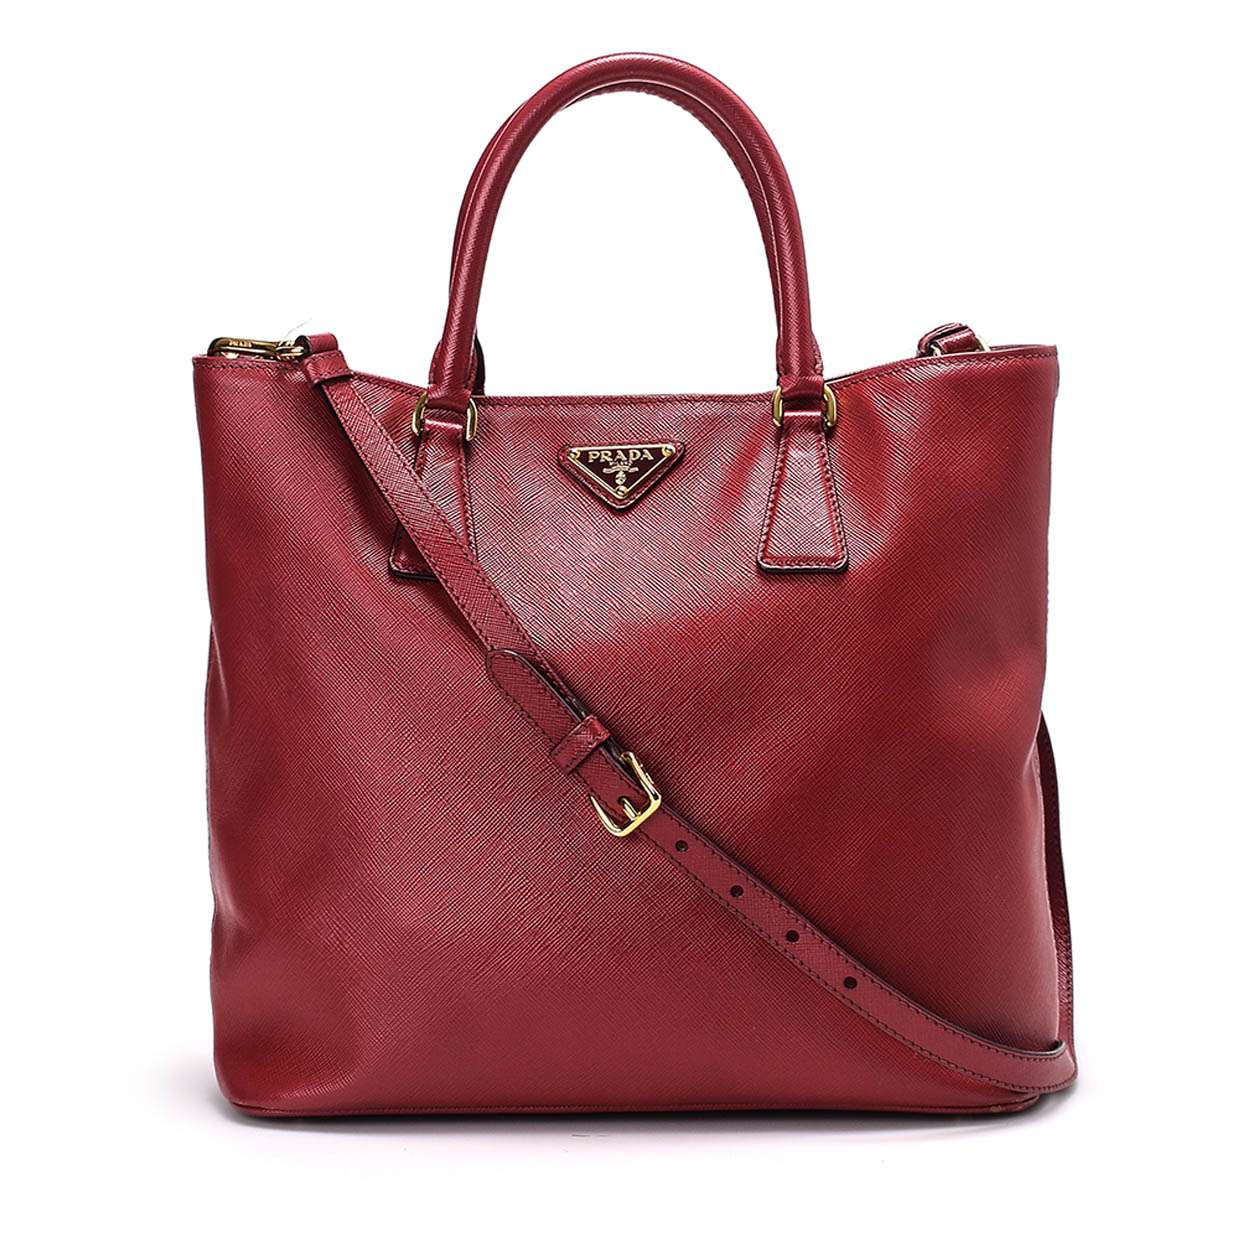 Prada - Red Saffiano Leather Medium Top Handle Bag